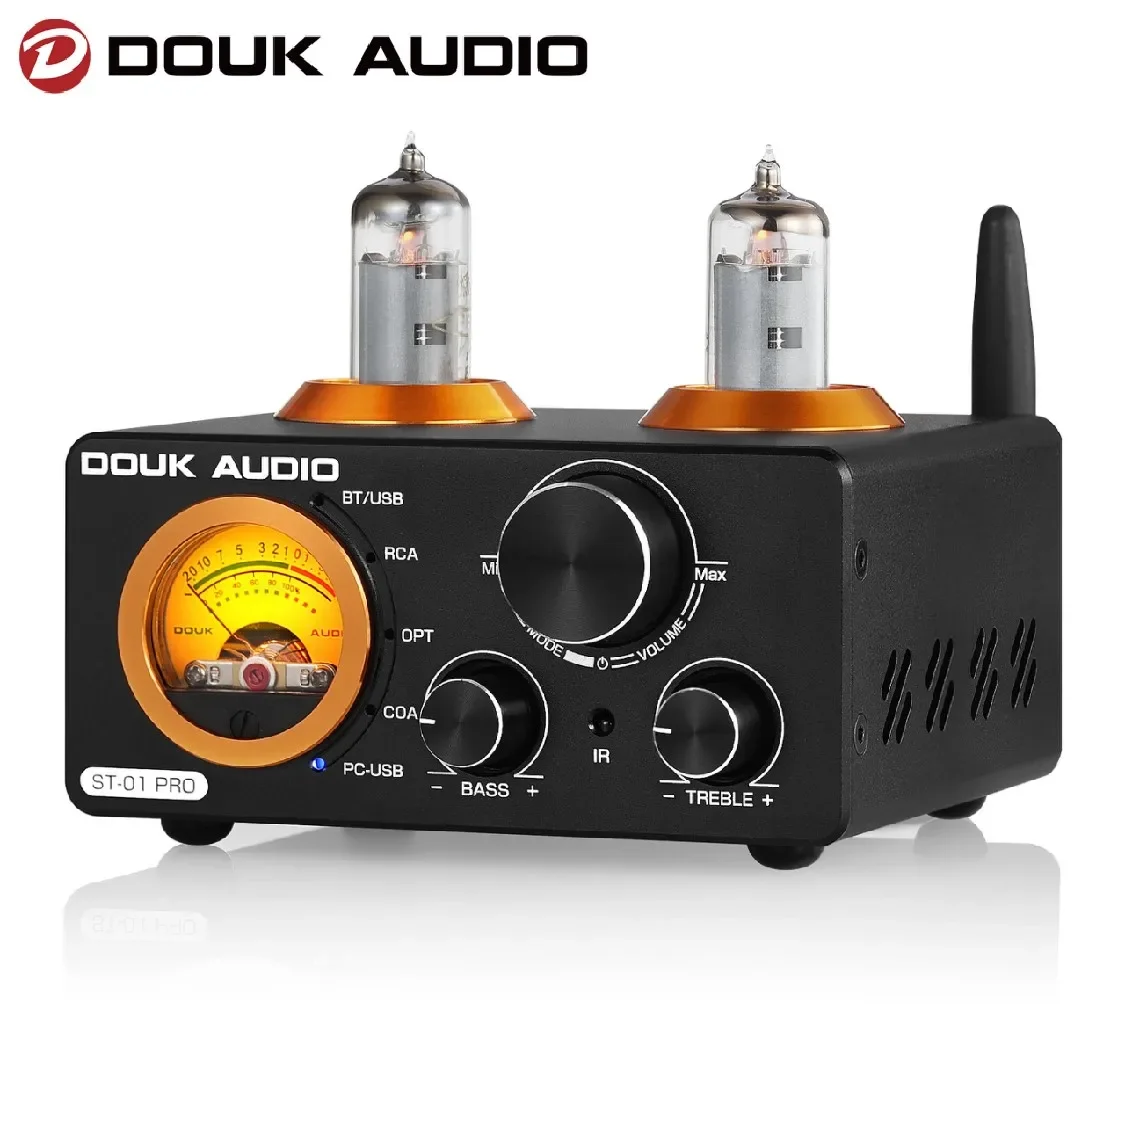 Douk Audio HiFi Vacuum Tube Power Amplifier Bluetooth 5.0 Stereo Receiver USB DAC COAX/OPT Digital Audio Amp VU Meter 100W+100W